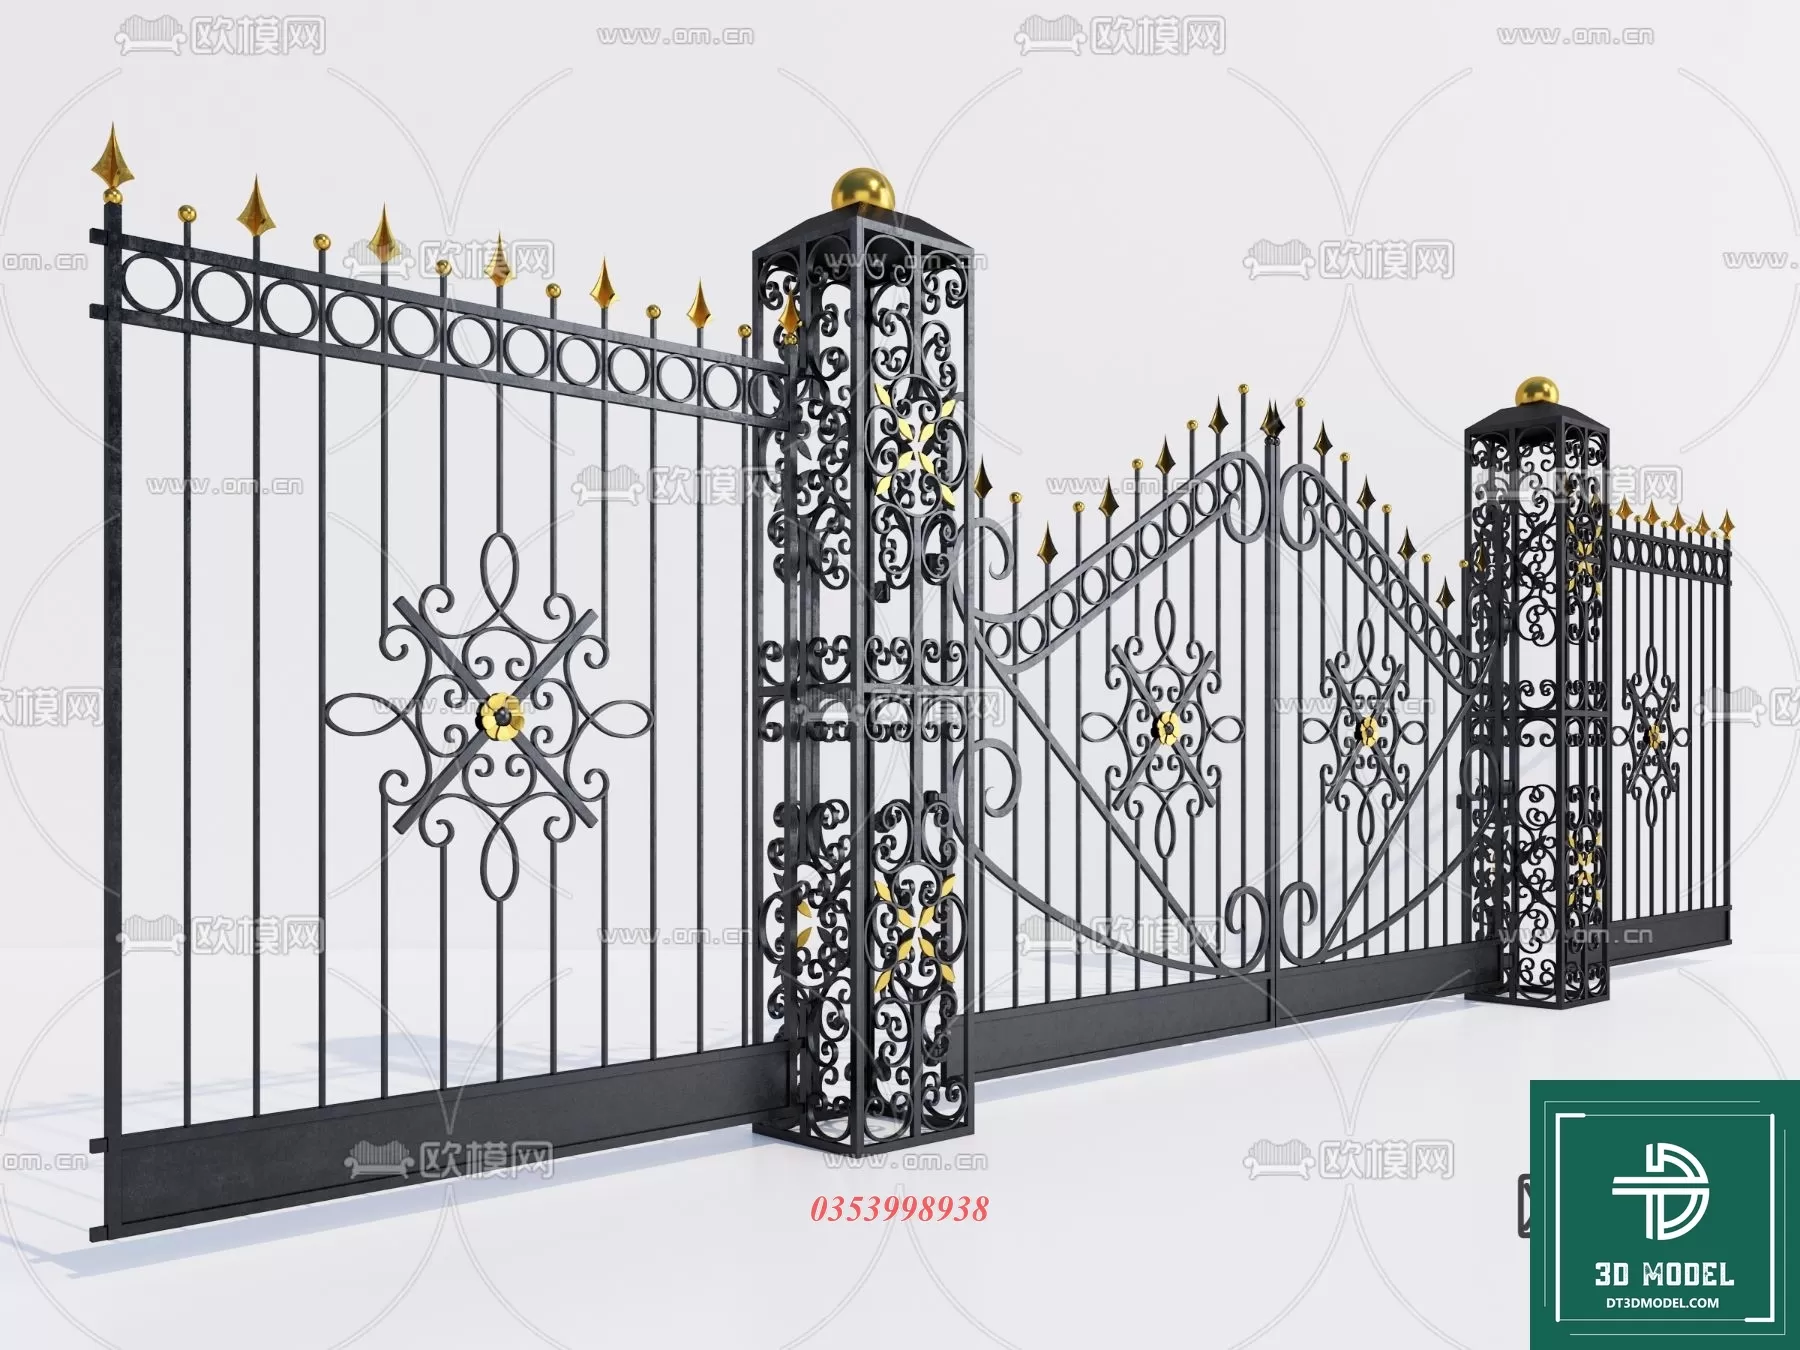 CLASSIC GATE – 3D MODELS – 087